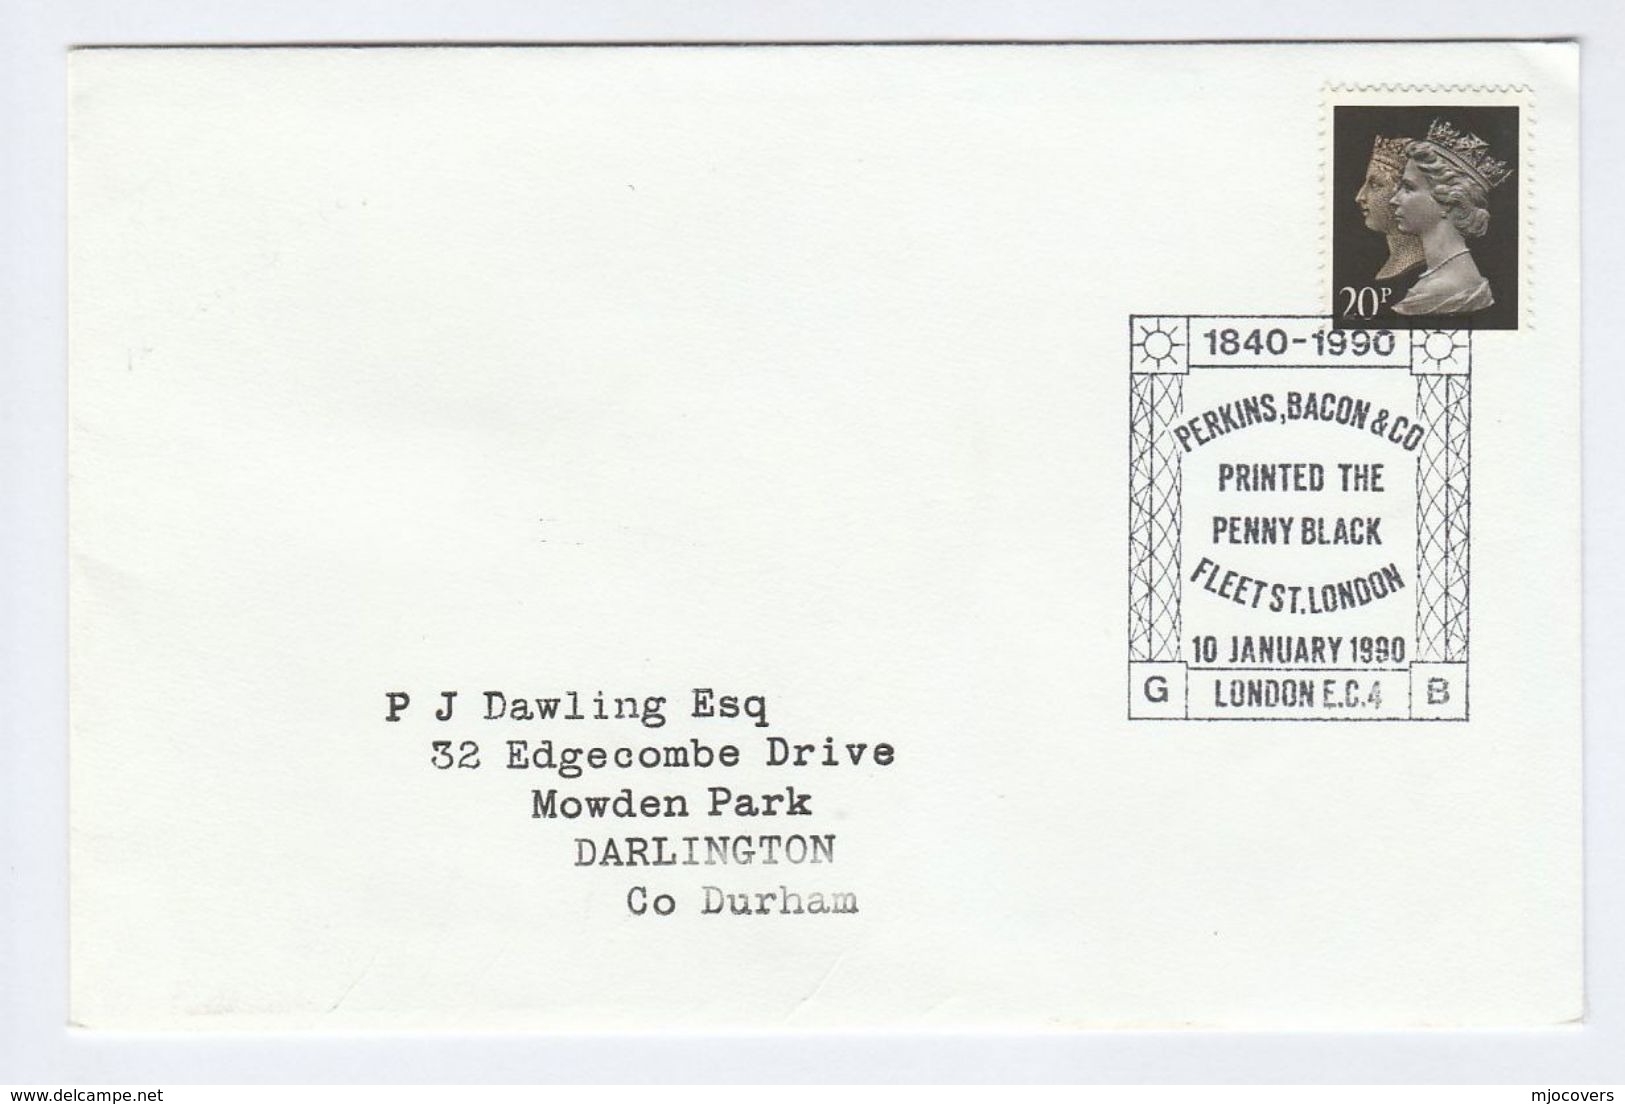 1990 PENNY BLACK Anniv PERKINS BACON PRINTER Pmk COVER FDC Fleet Street London  Gb Stamps - 1981-1990 Decimal Issues